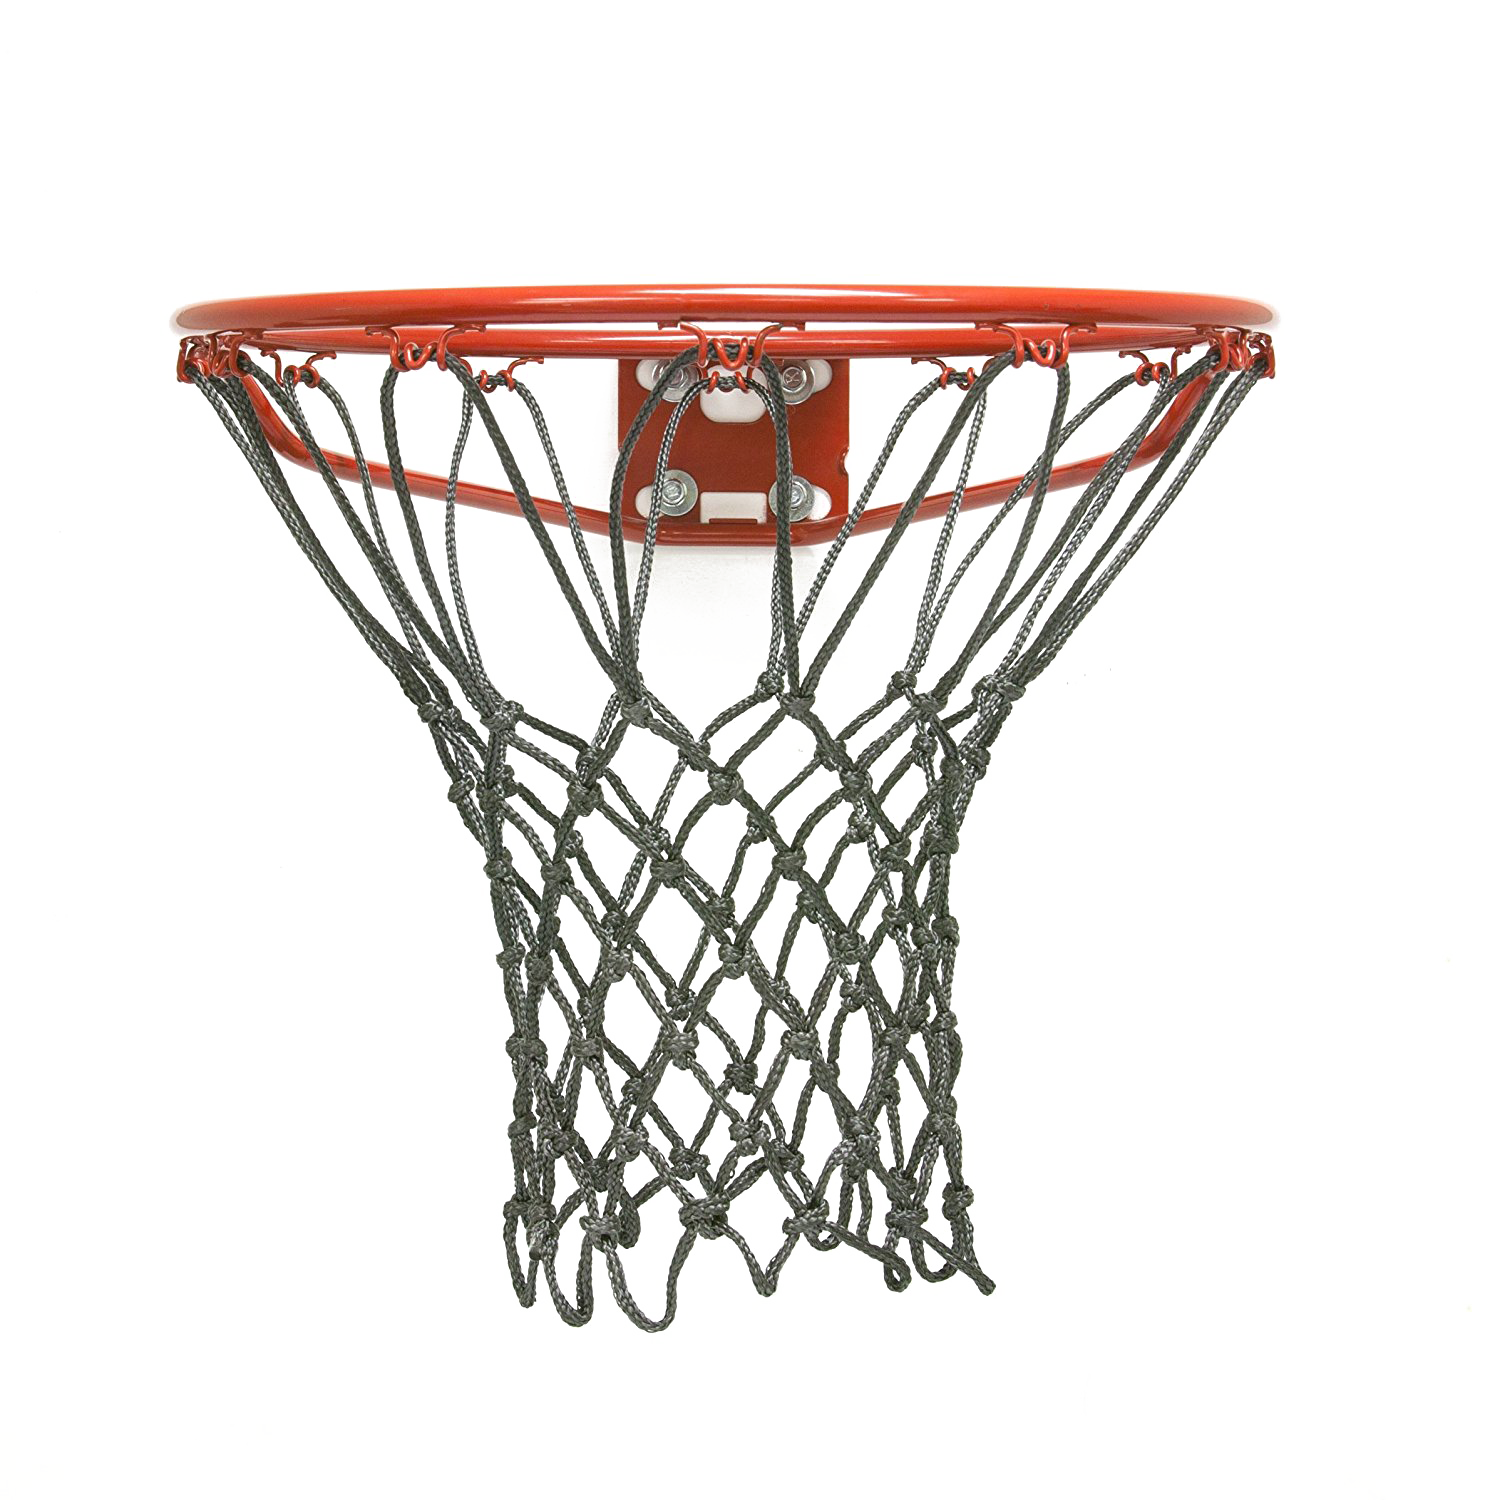 Canestro NBA Basketball Nets Backboard - nba png download - 1500*1500